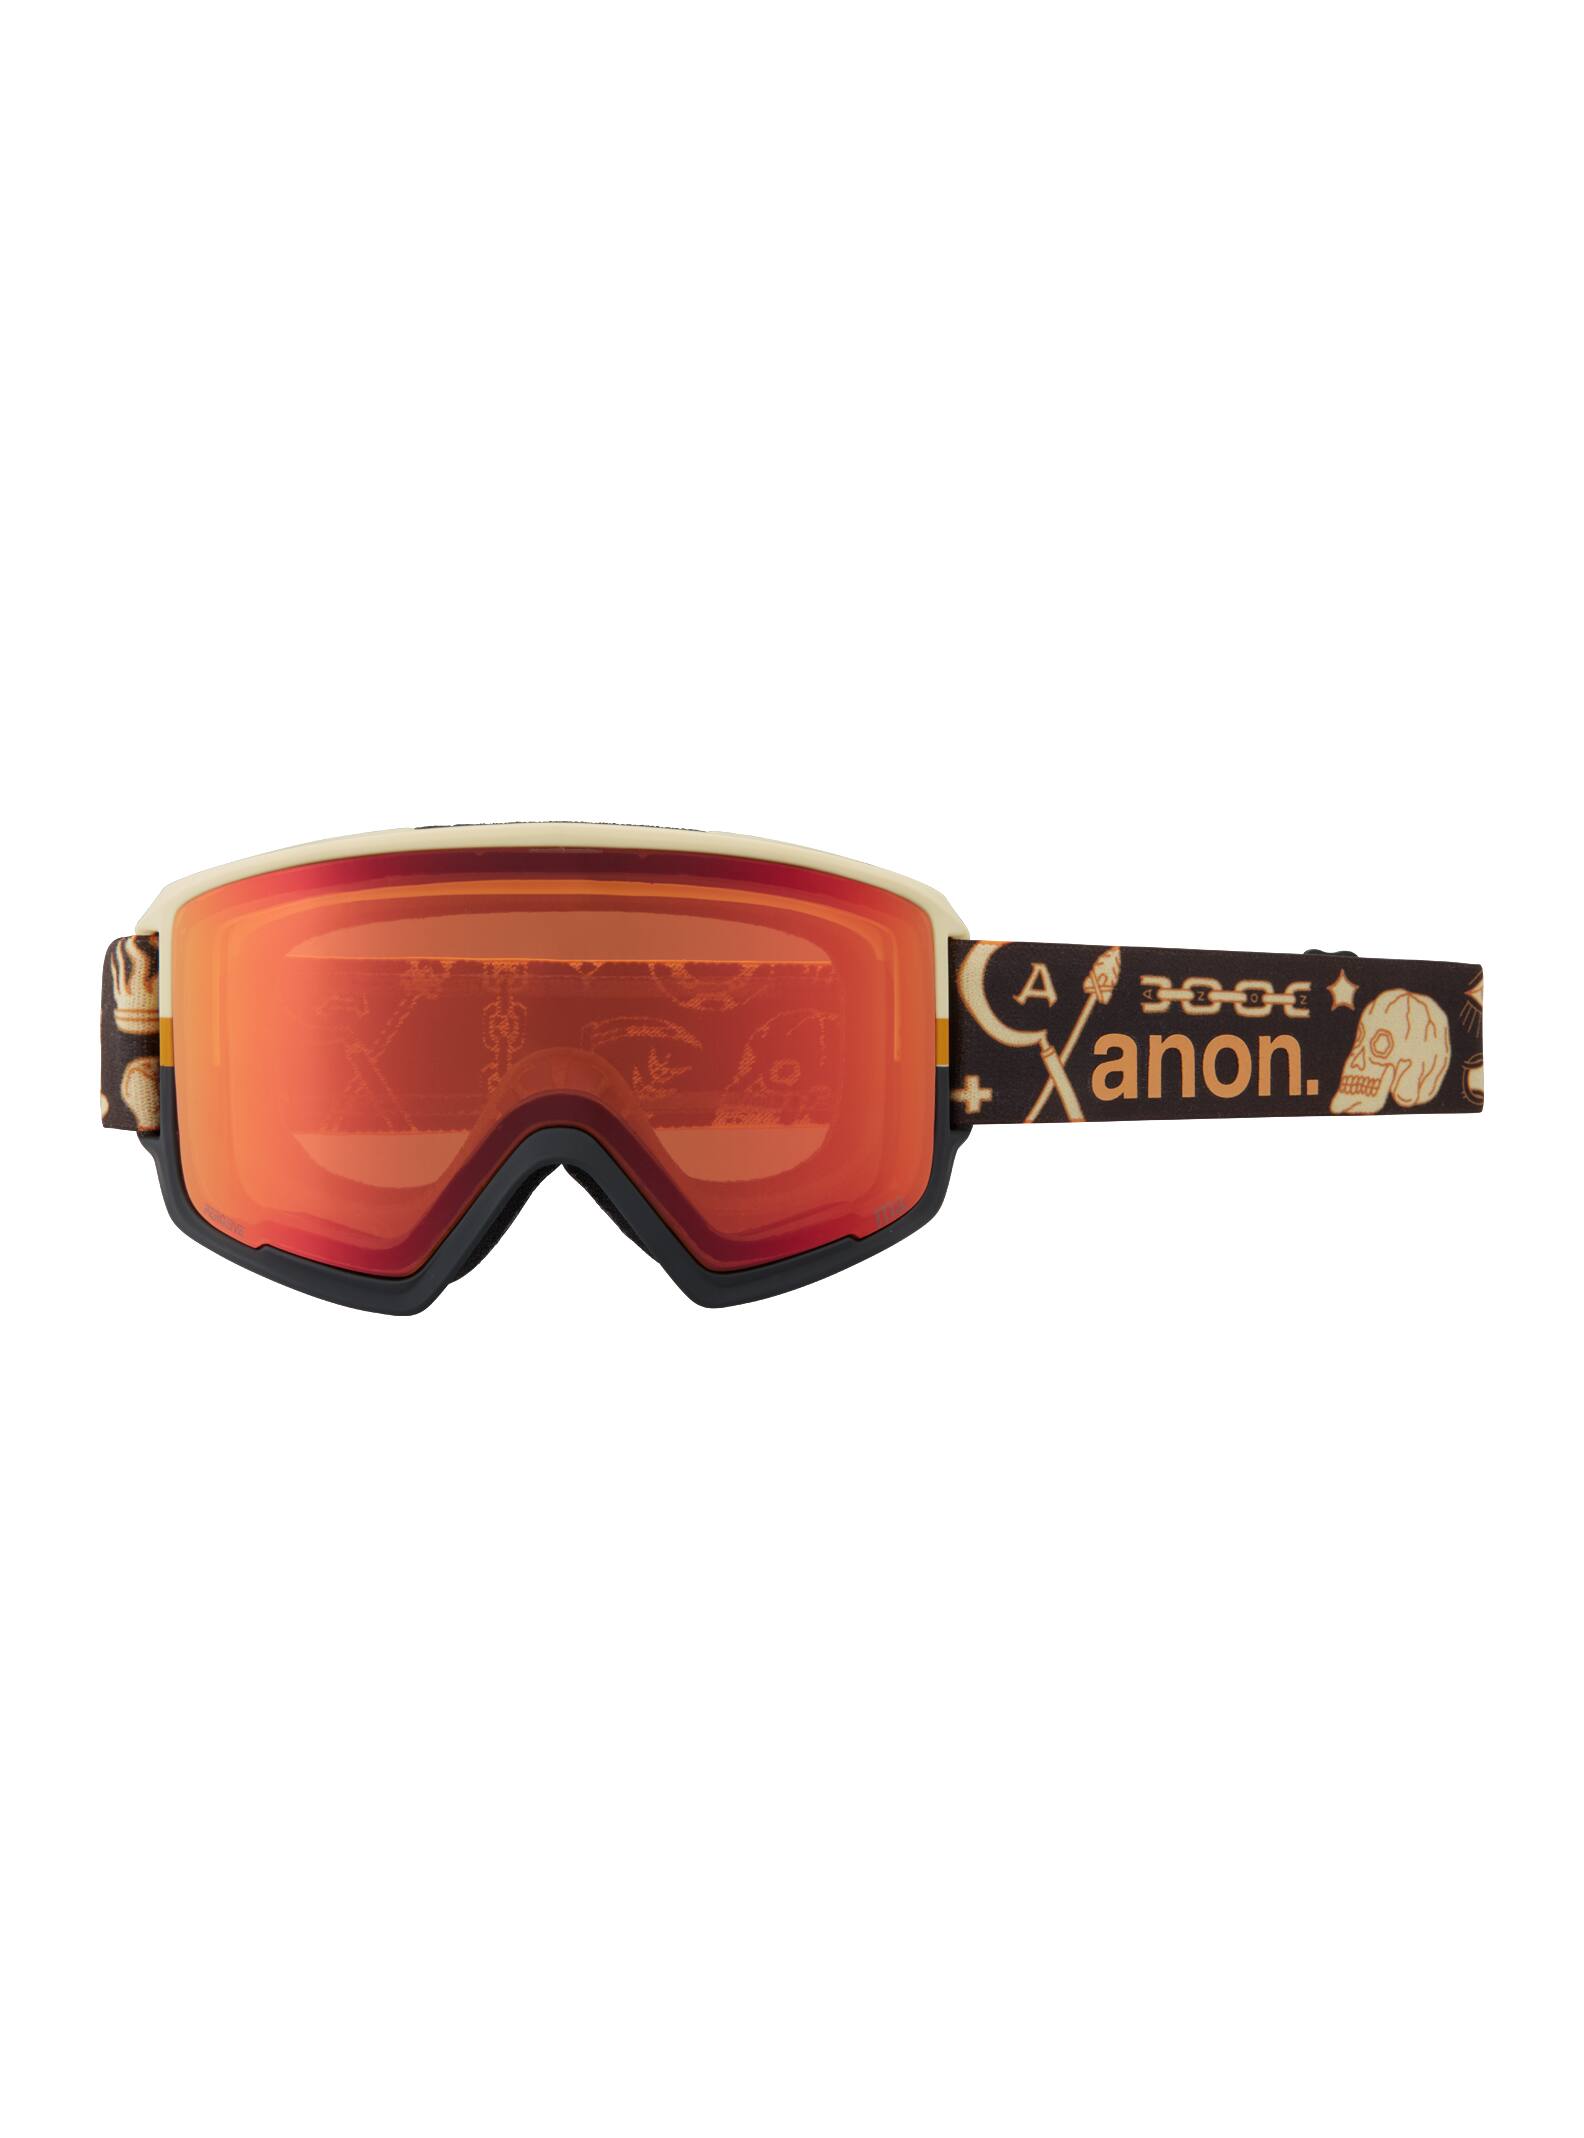 Snowboard and Ski Goggles & Lenses | Burton Snowboards DK